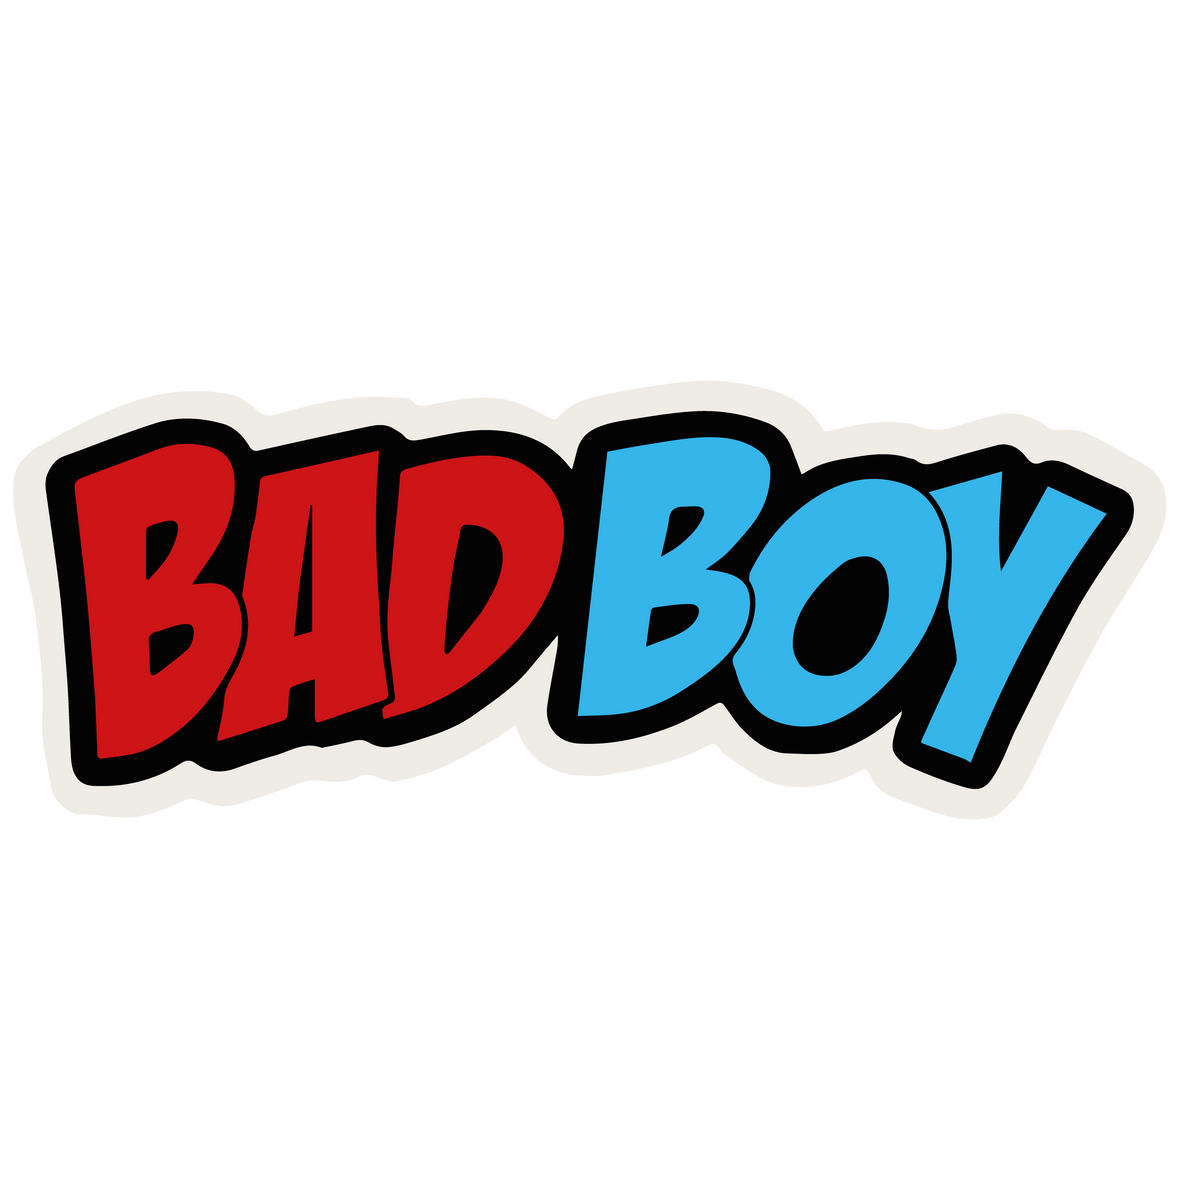 Butt patch "BAD BOY"